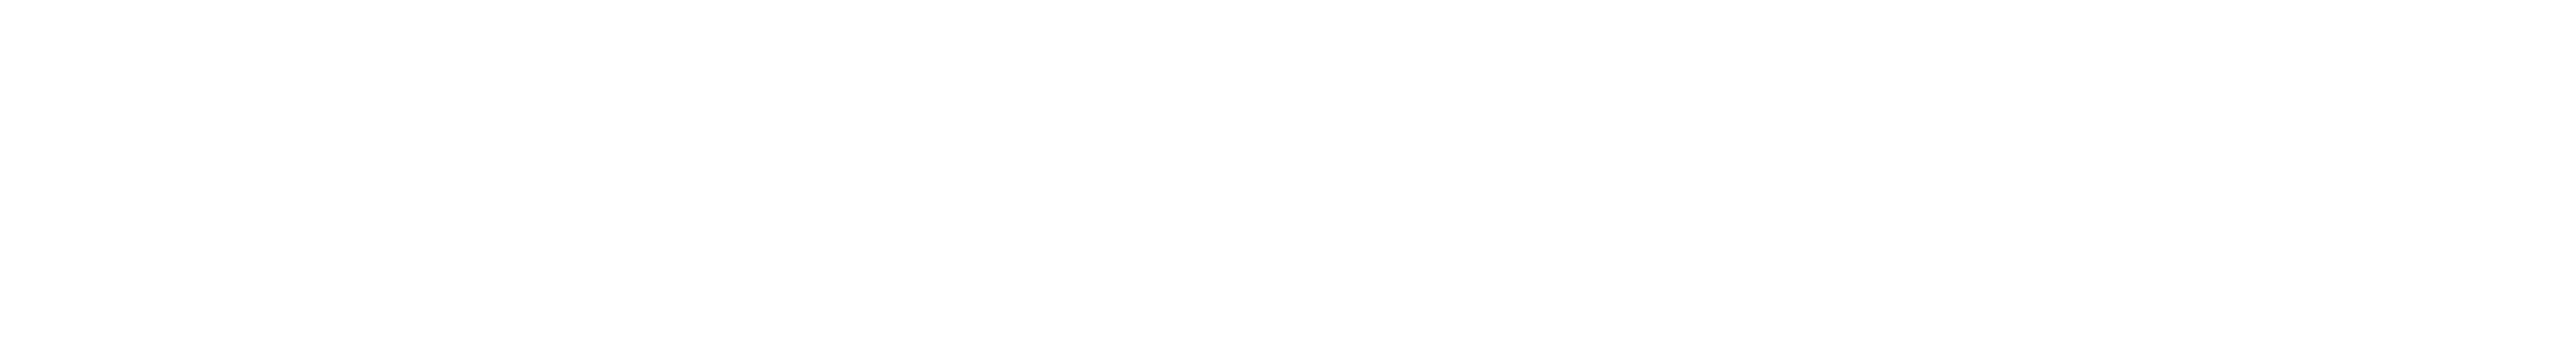 UVU Culinary Arts Department logo